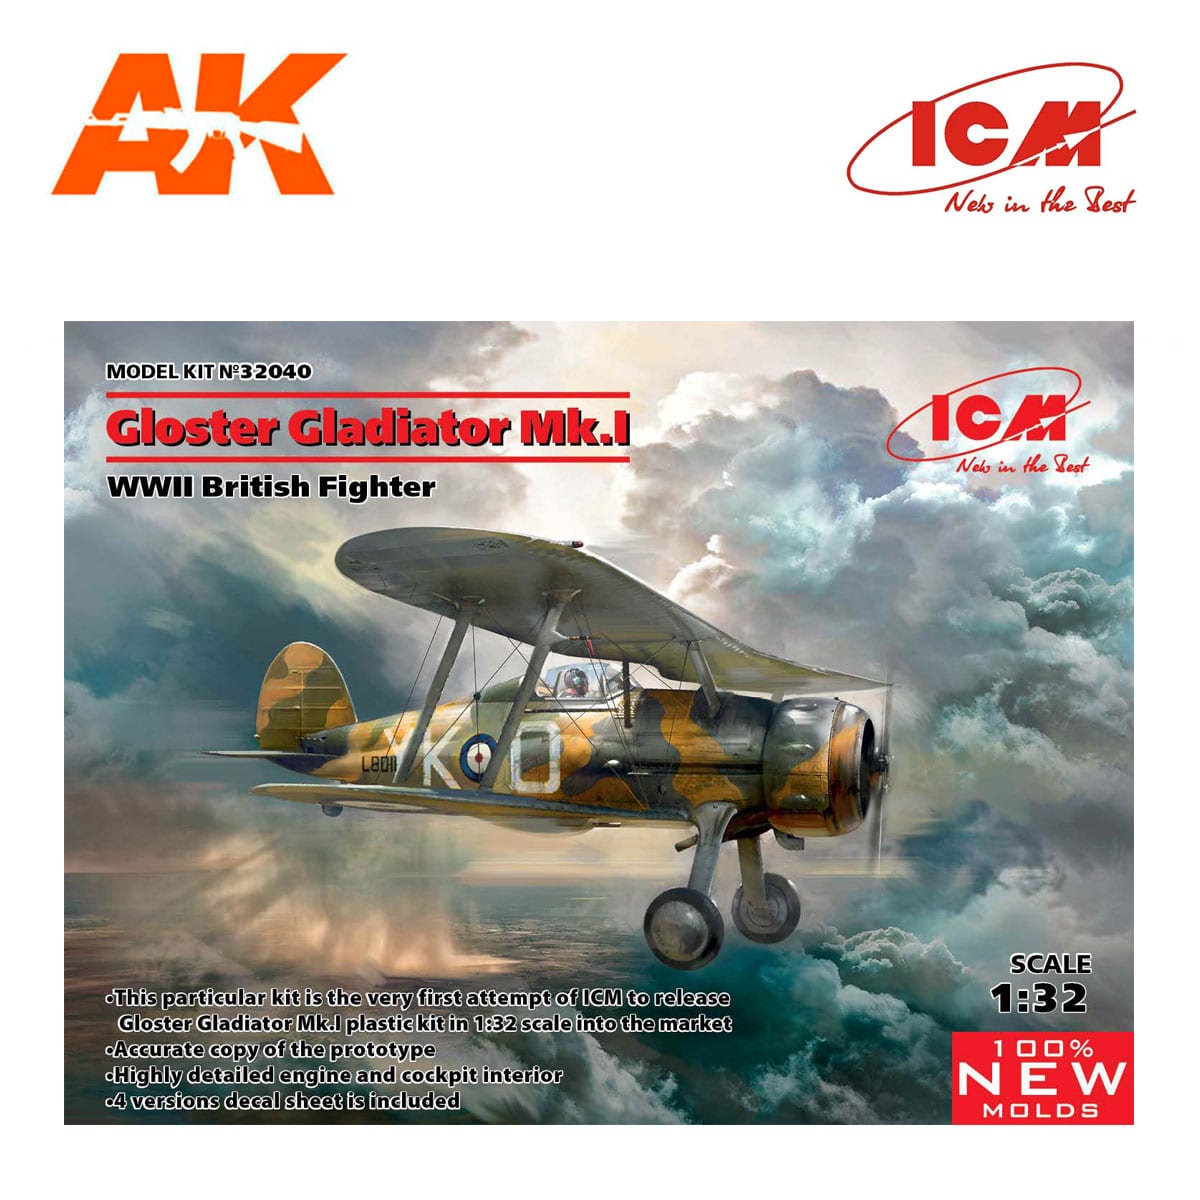 Gloster Gladiator Mk.I, WWII British Fighter (100% new molds) 1/32